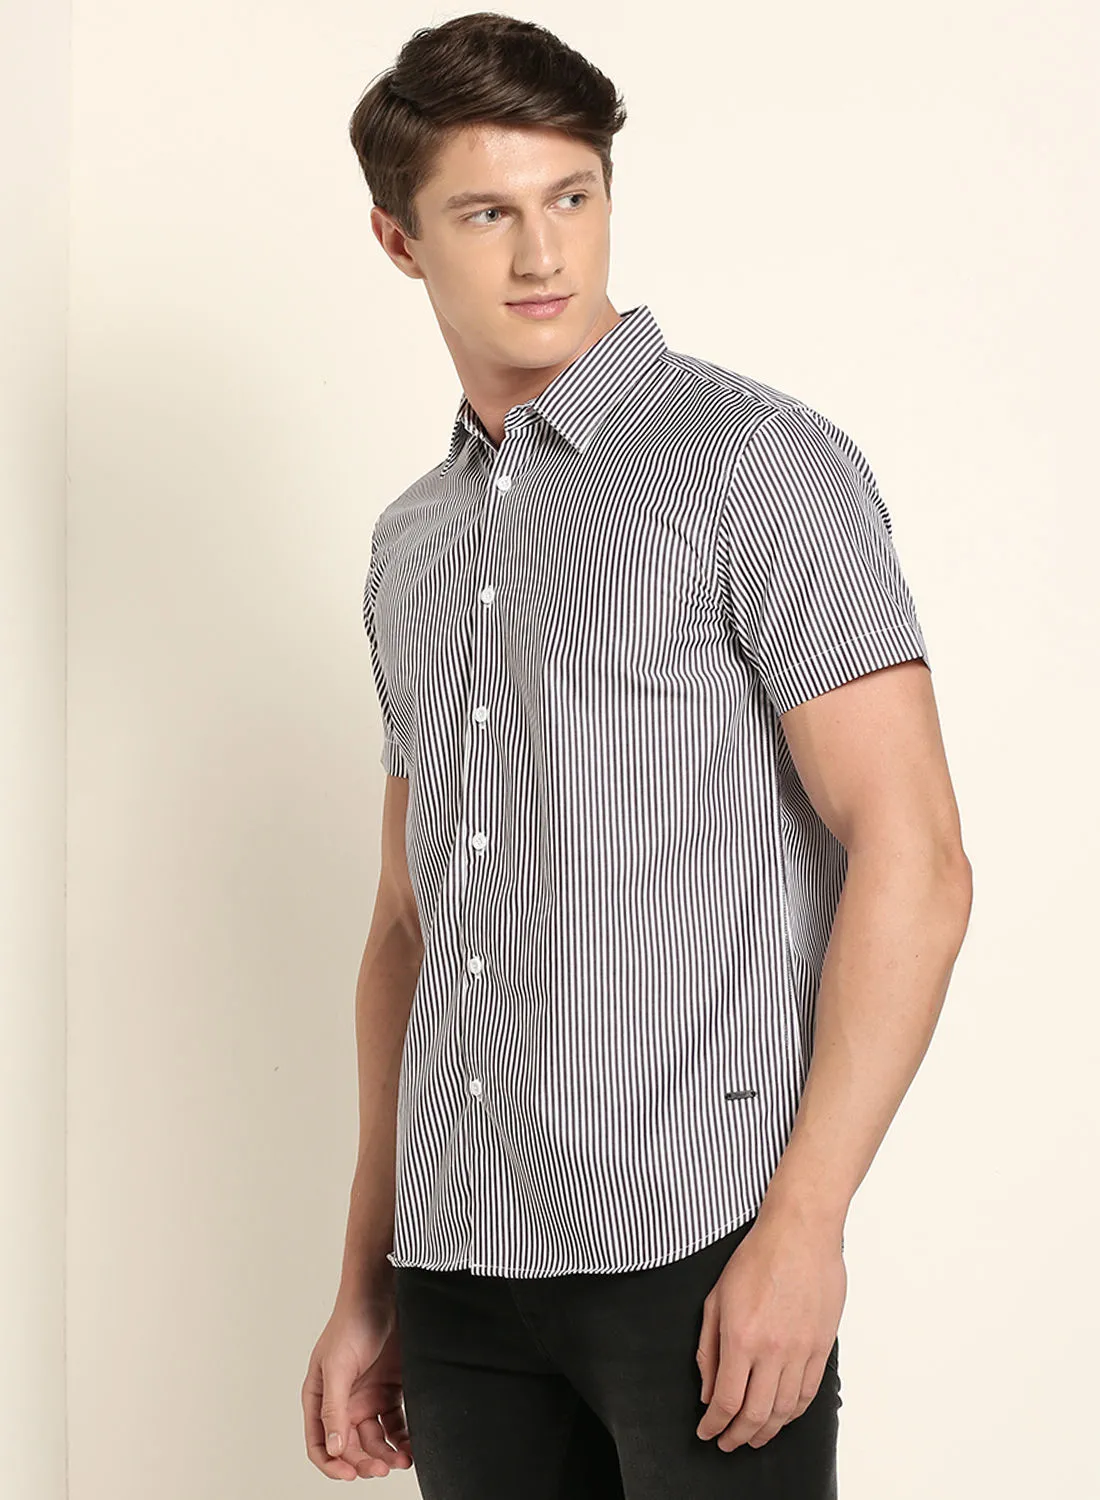 ABOF Stripes Pattern Regular Fit Collared Neck Short Sleeve Shirt White/Grey